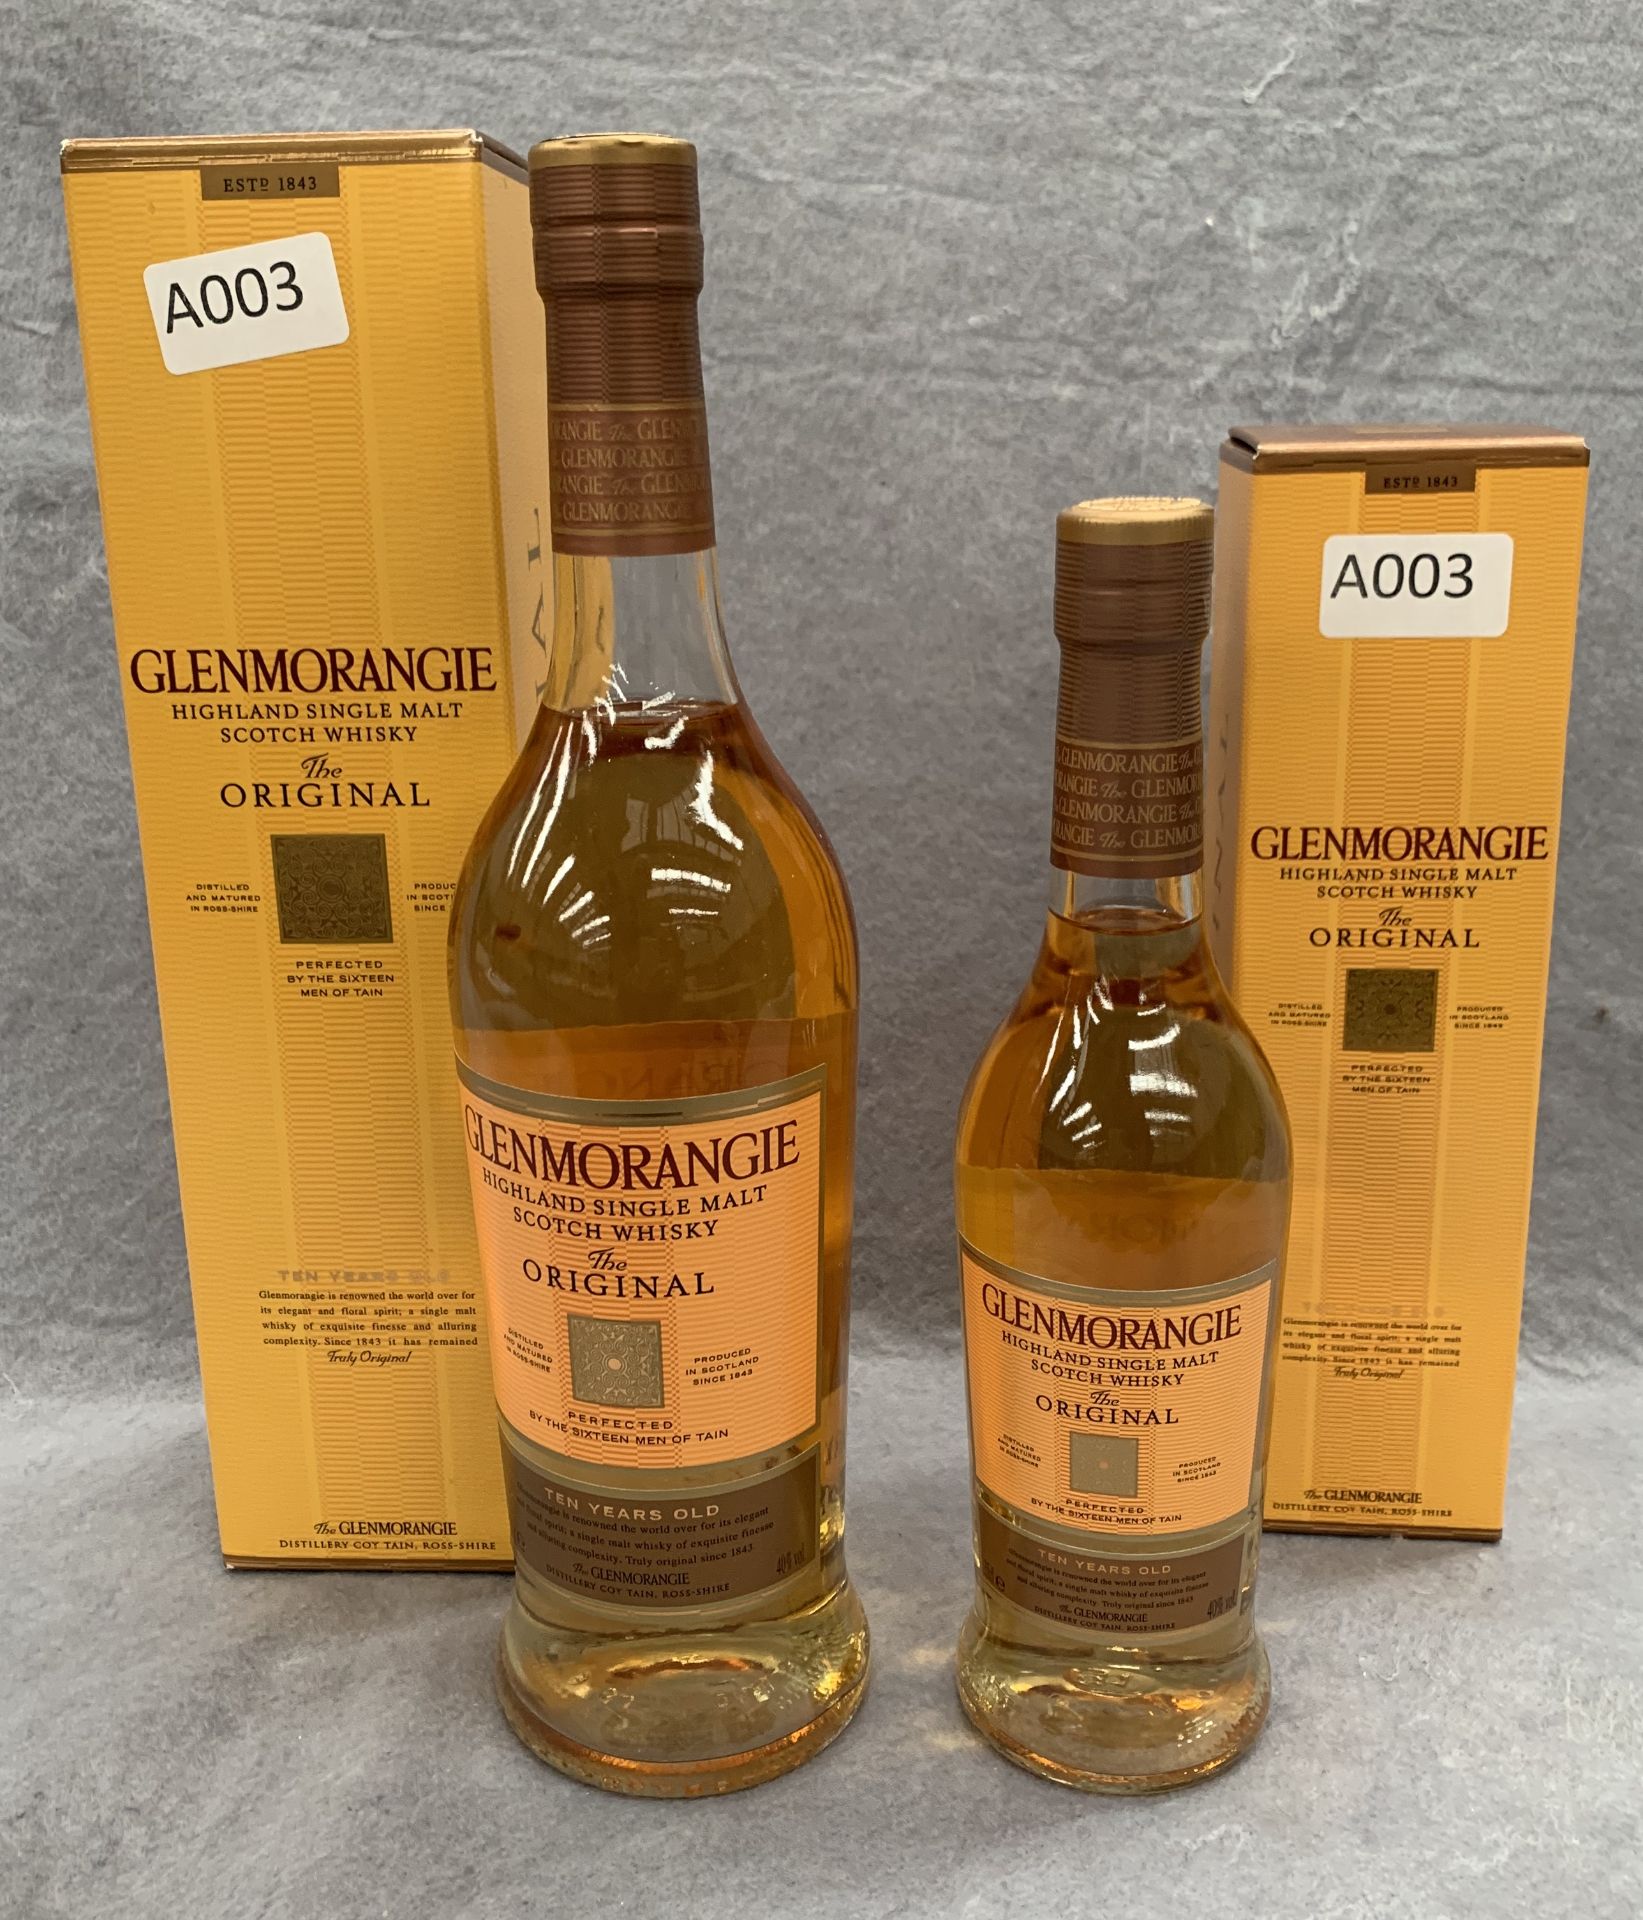 A 70cl bottle and a 35cl bottle of Glenmorangie Highland Single Malt Scotch Whisky, aged 10 years,